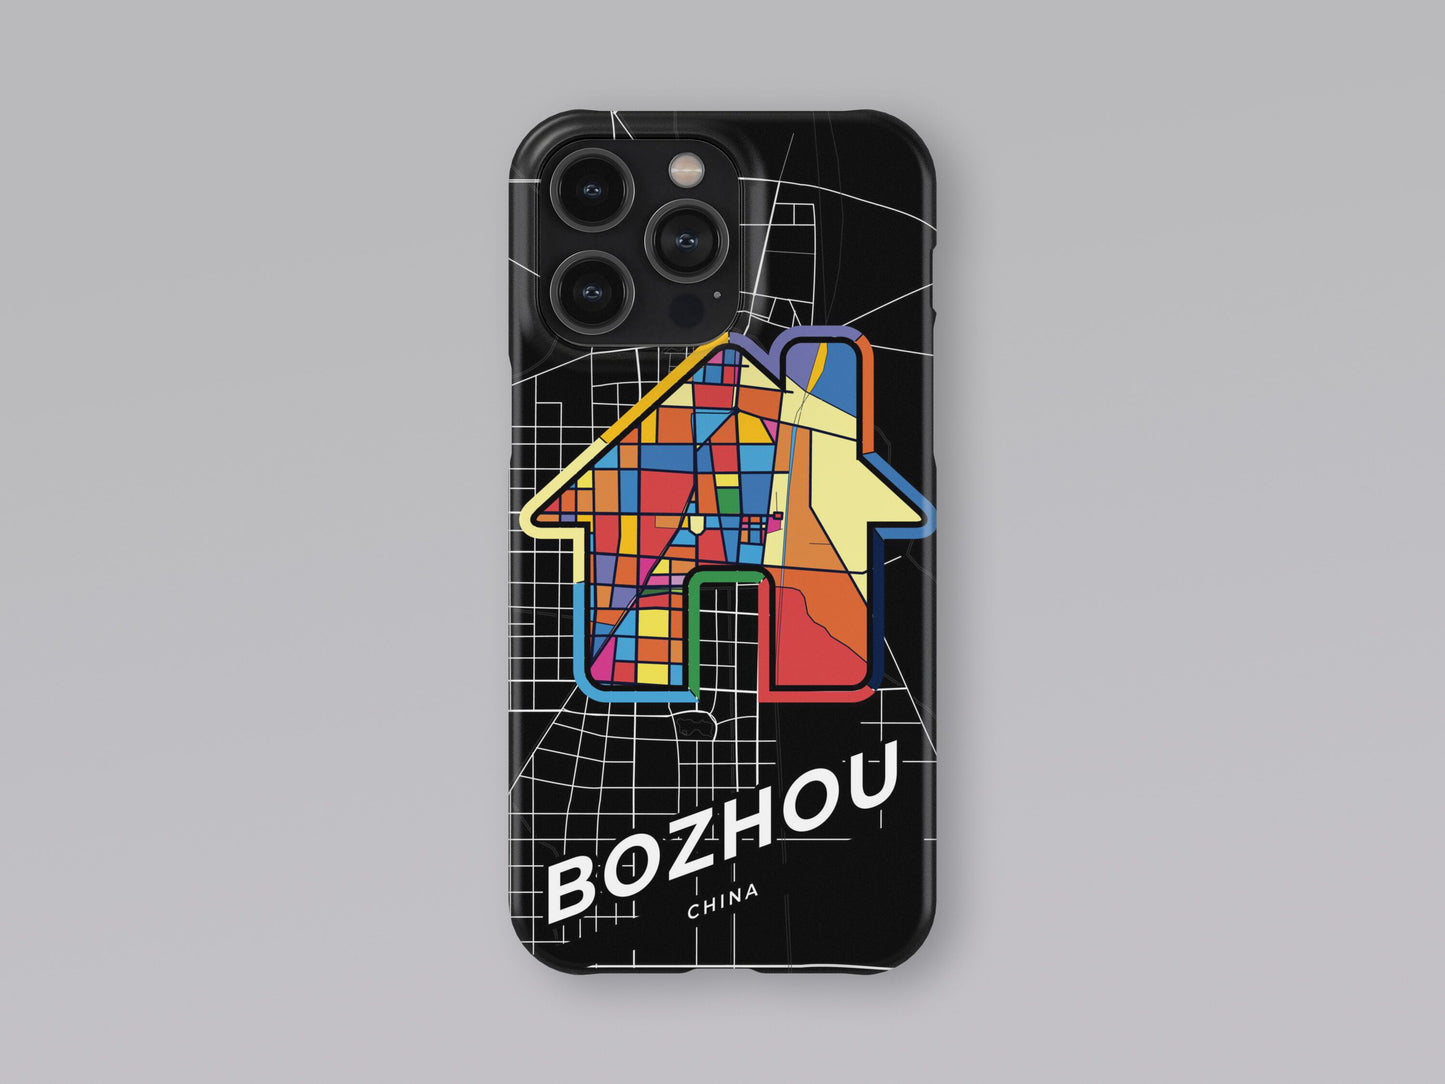 Bozhou China slim phone case with colorful icon. Birthday, wedding or housewarming gift. Couple match cases. 3